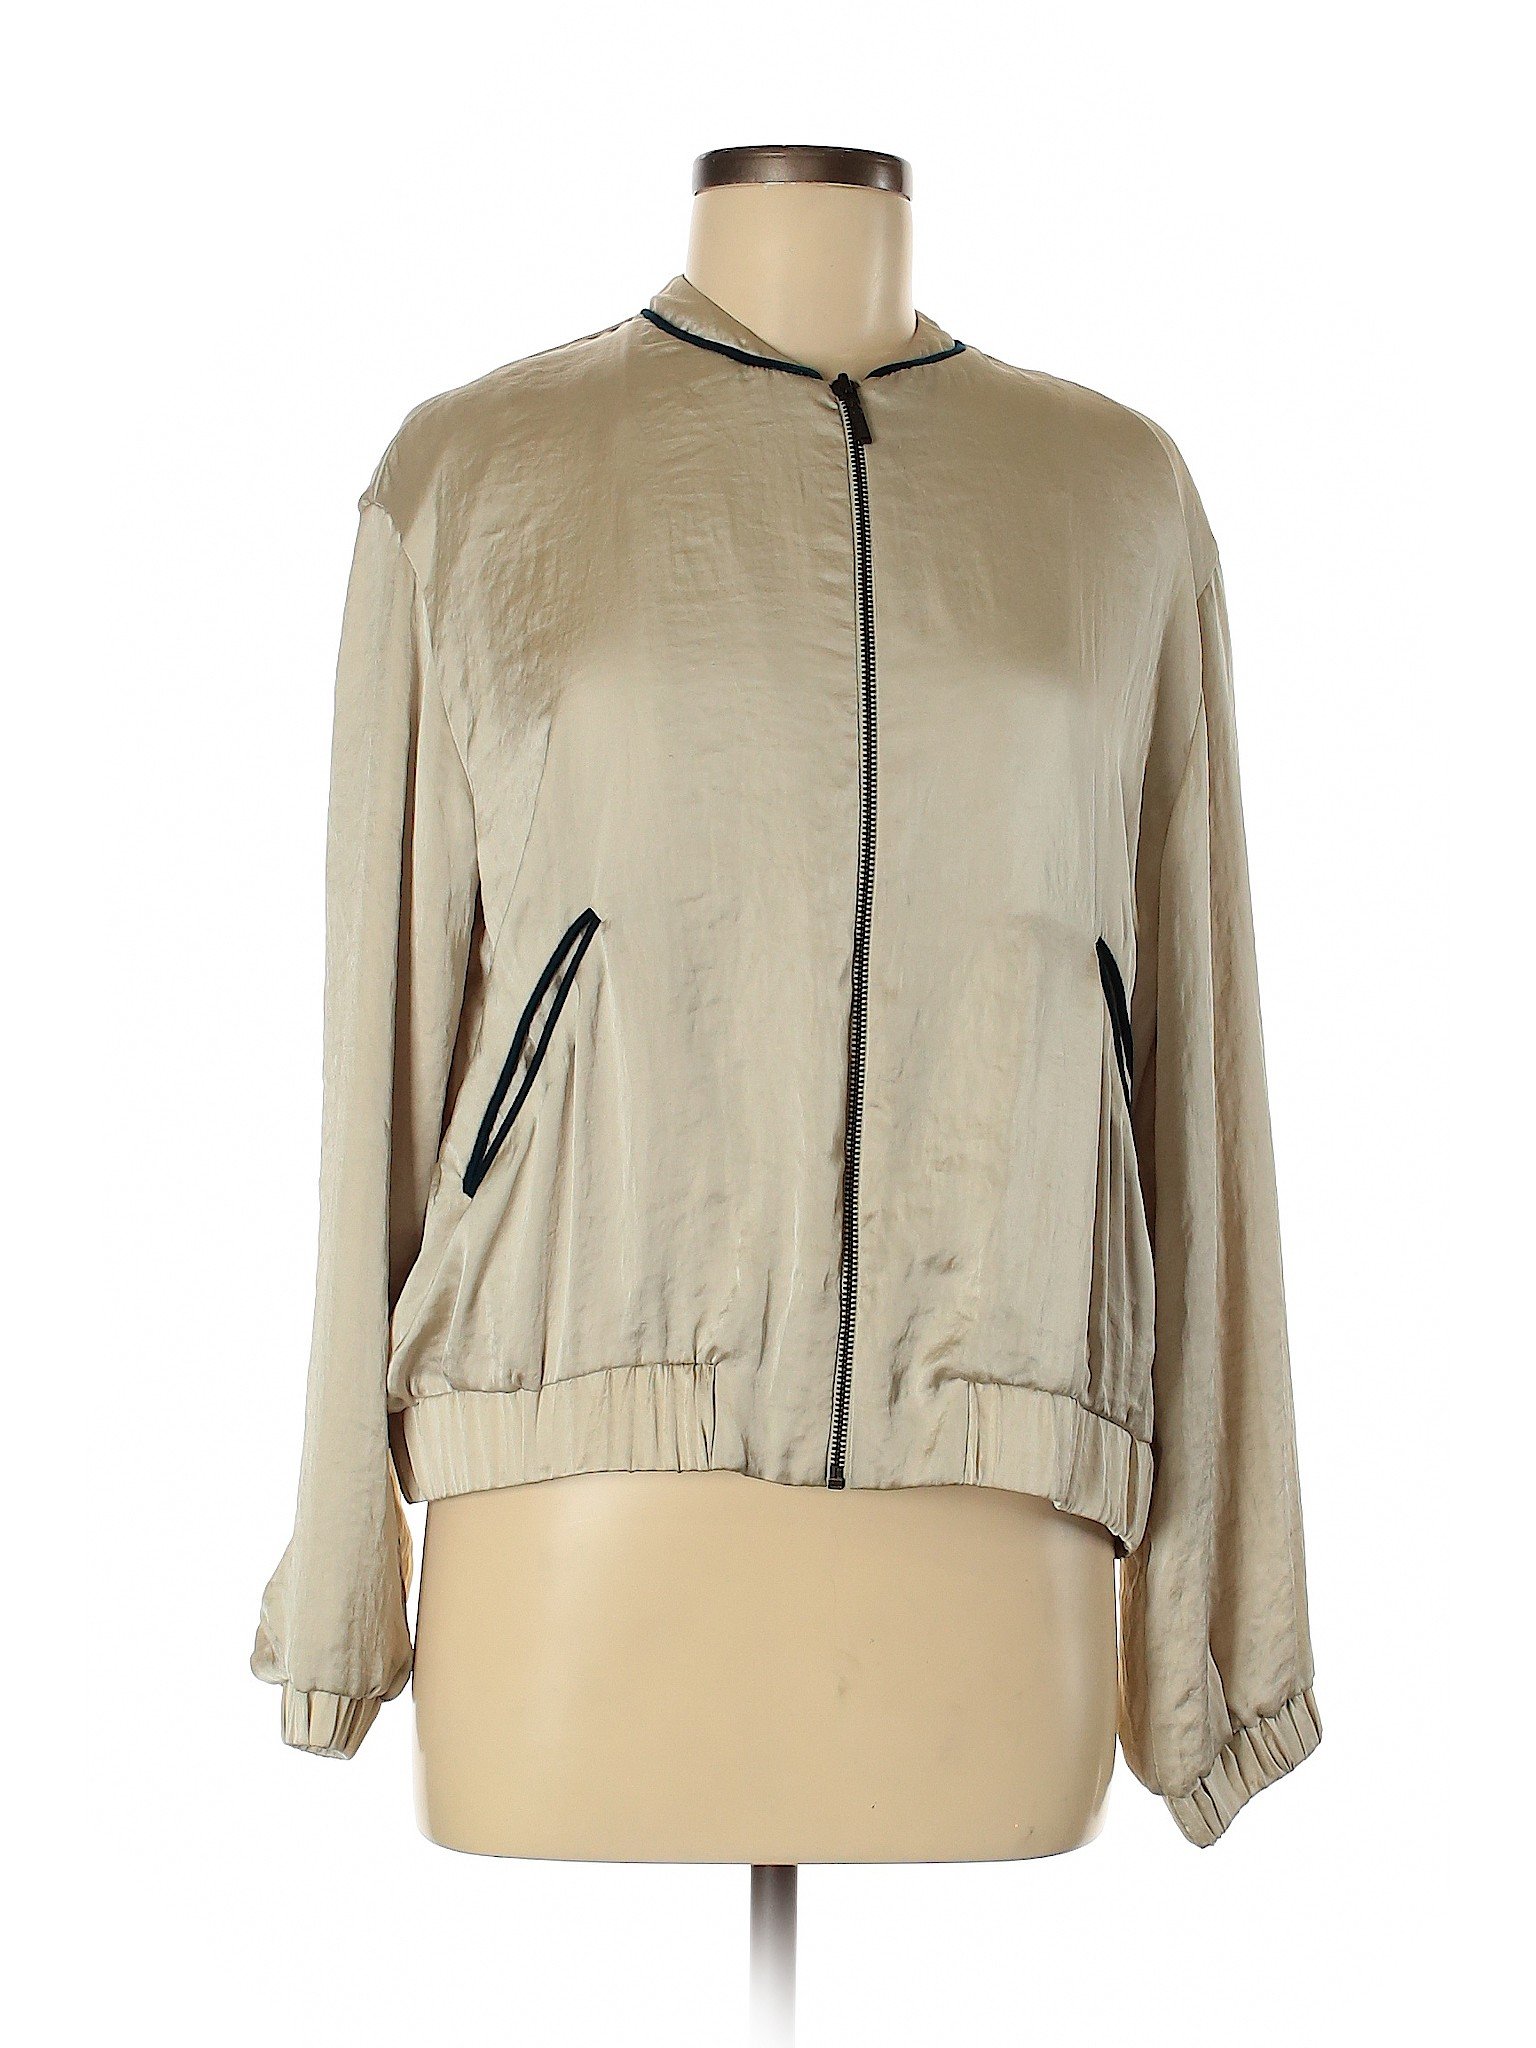 Zara Basic Women Brown Jacket M | eBay